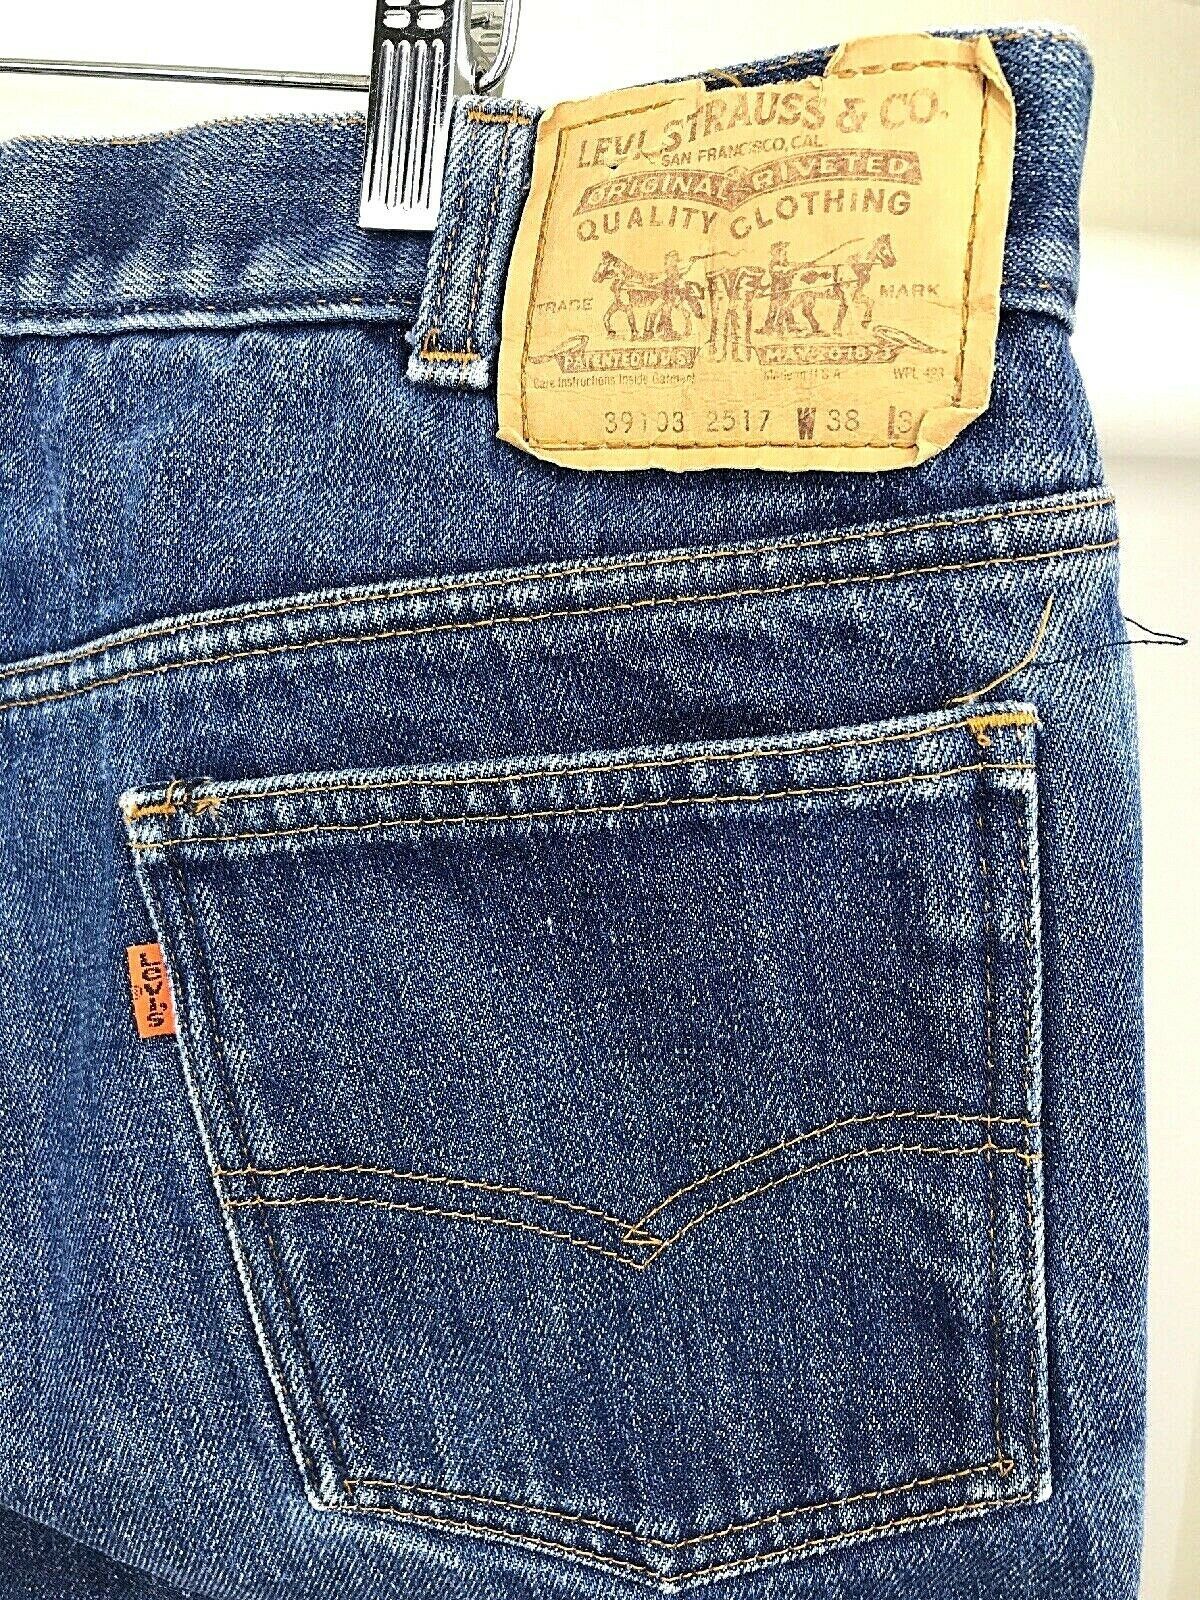 80s Levi’s Fleece Lined Jeans 39103 2517 Size 36x28 USA Talon Orange ...